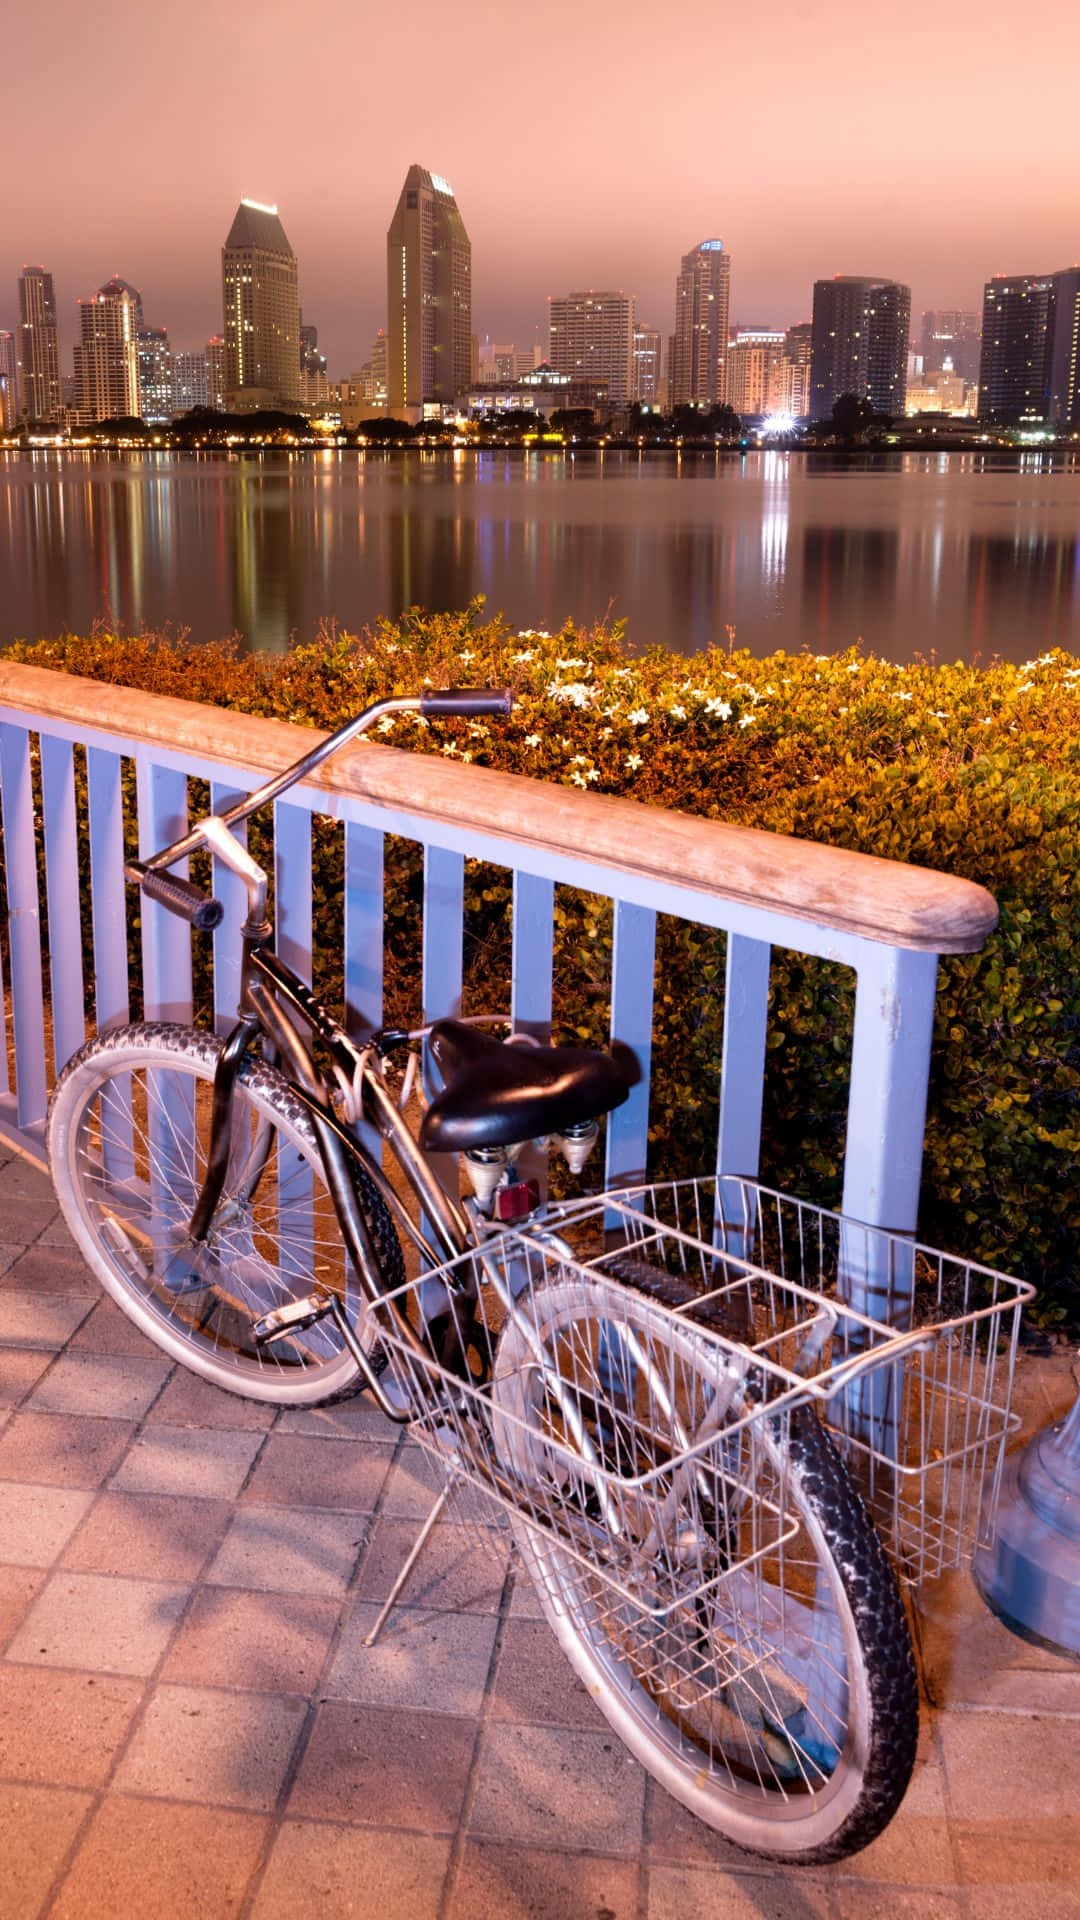 Parked Bike In San Diego Iphone Wallpaper